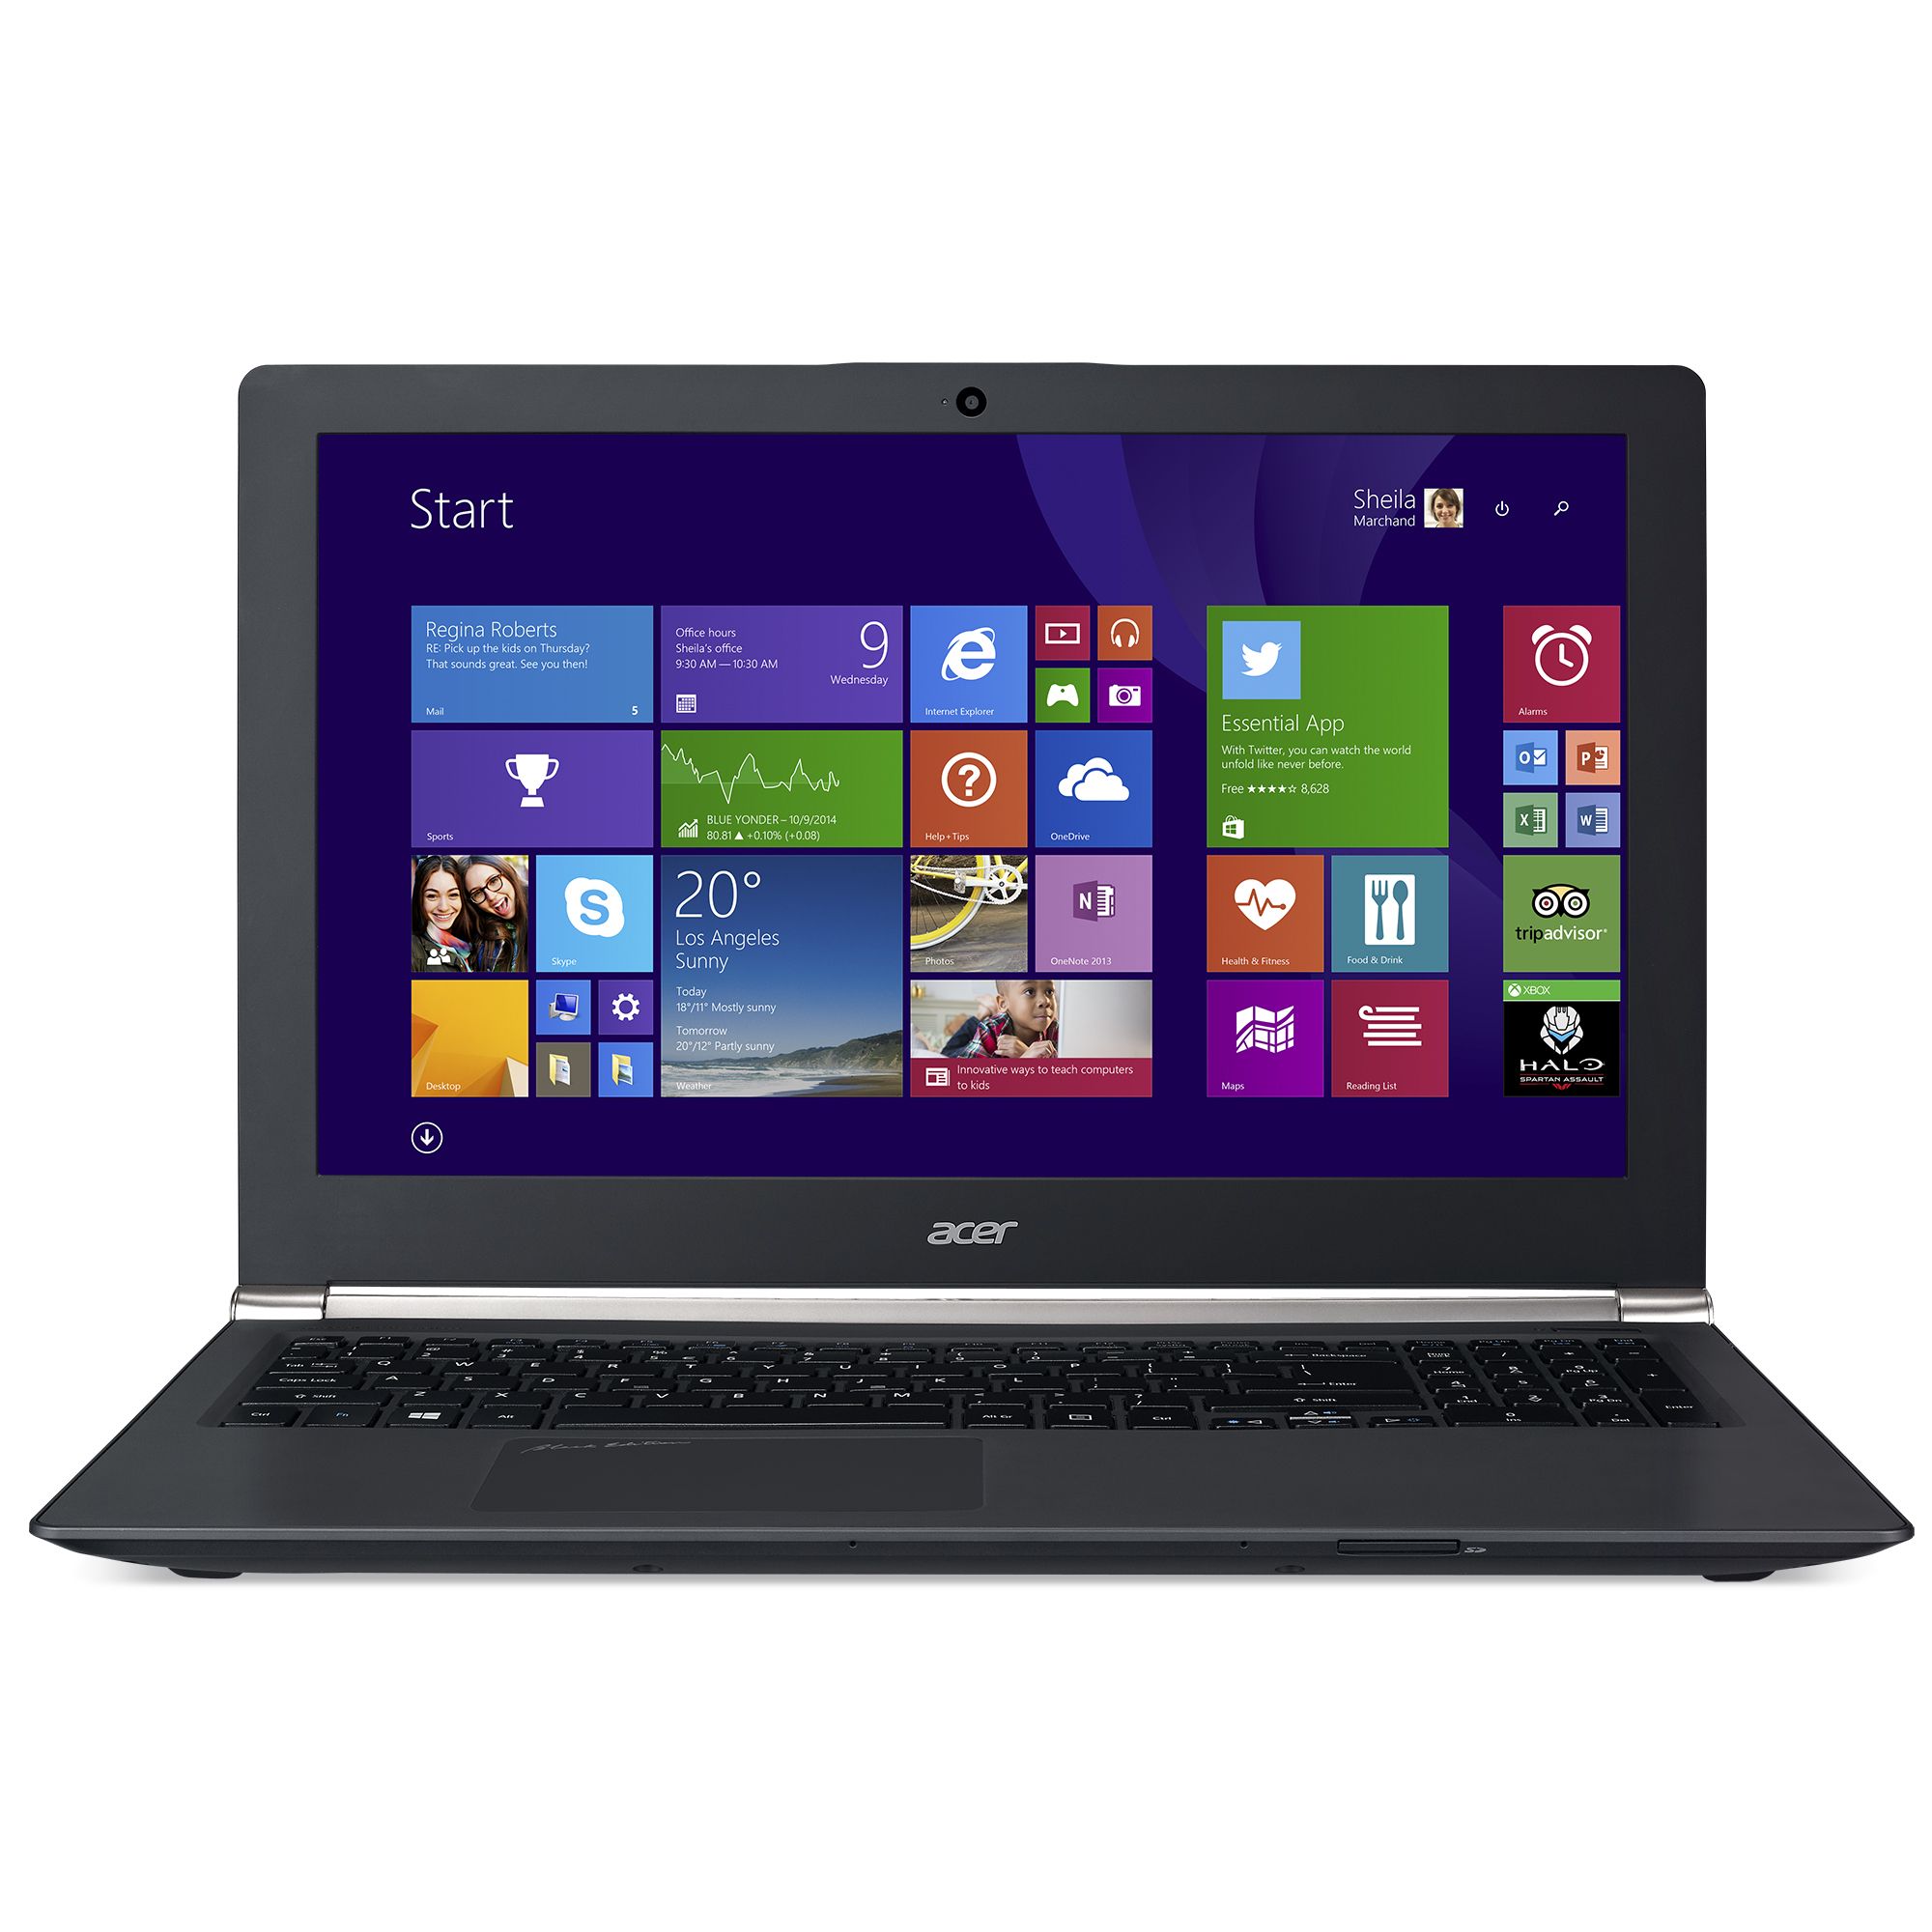  Laptop Acer V Nitro VN7-791G-526Q, Intel Core i5-4210H, 8GB DDR3, SSHD 1TB, nVidia GeForce GTX 850M 4GB, Windows 8 